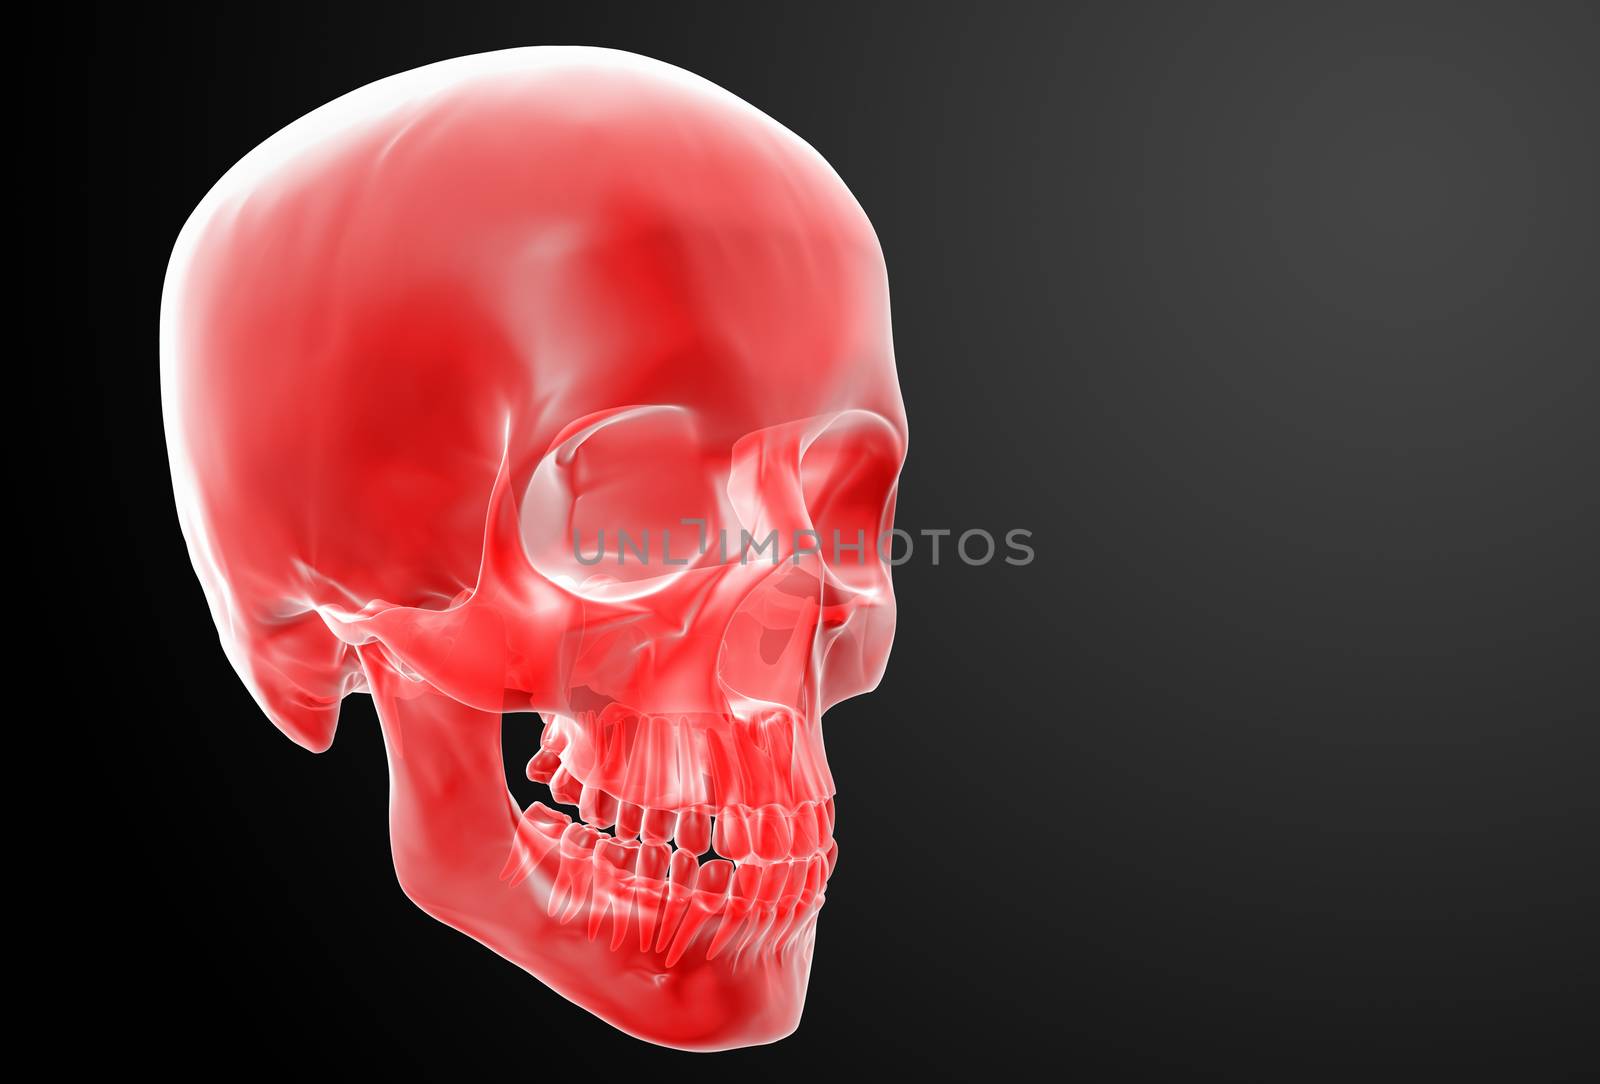 3d render red skull on black background - side view